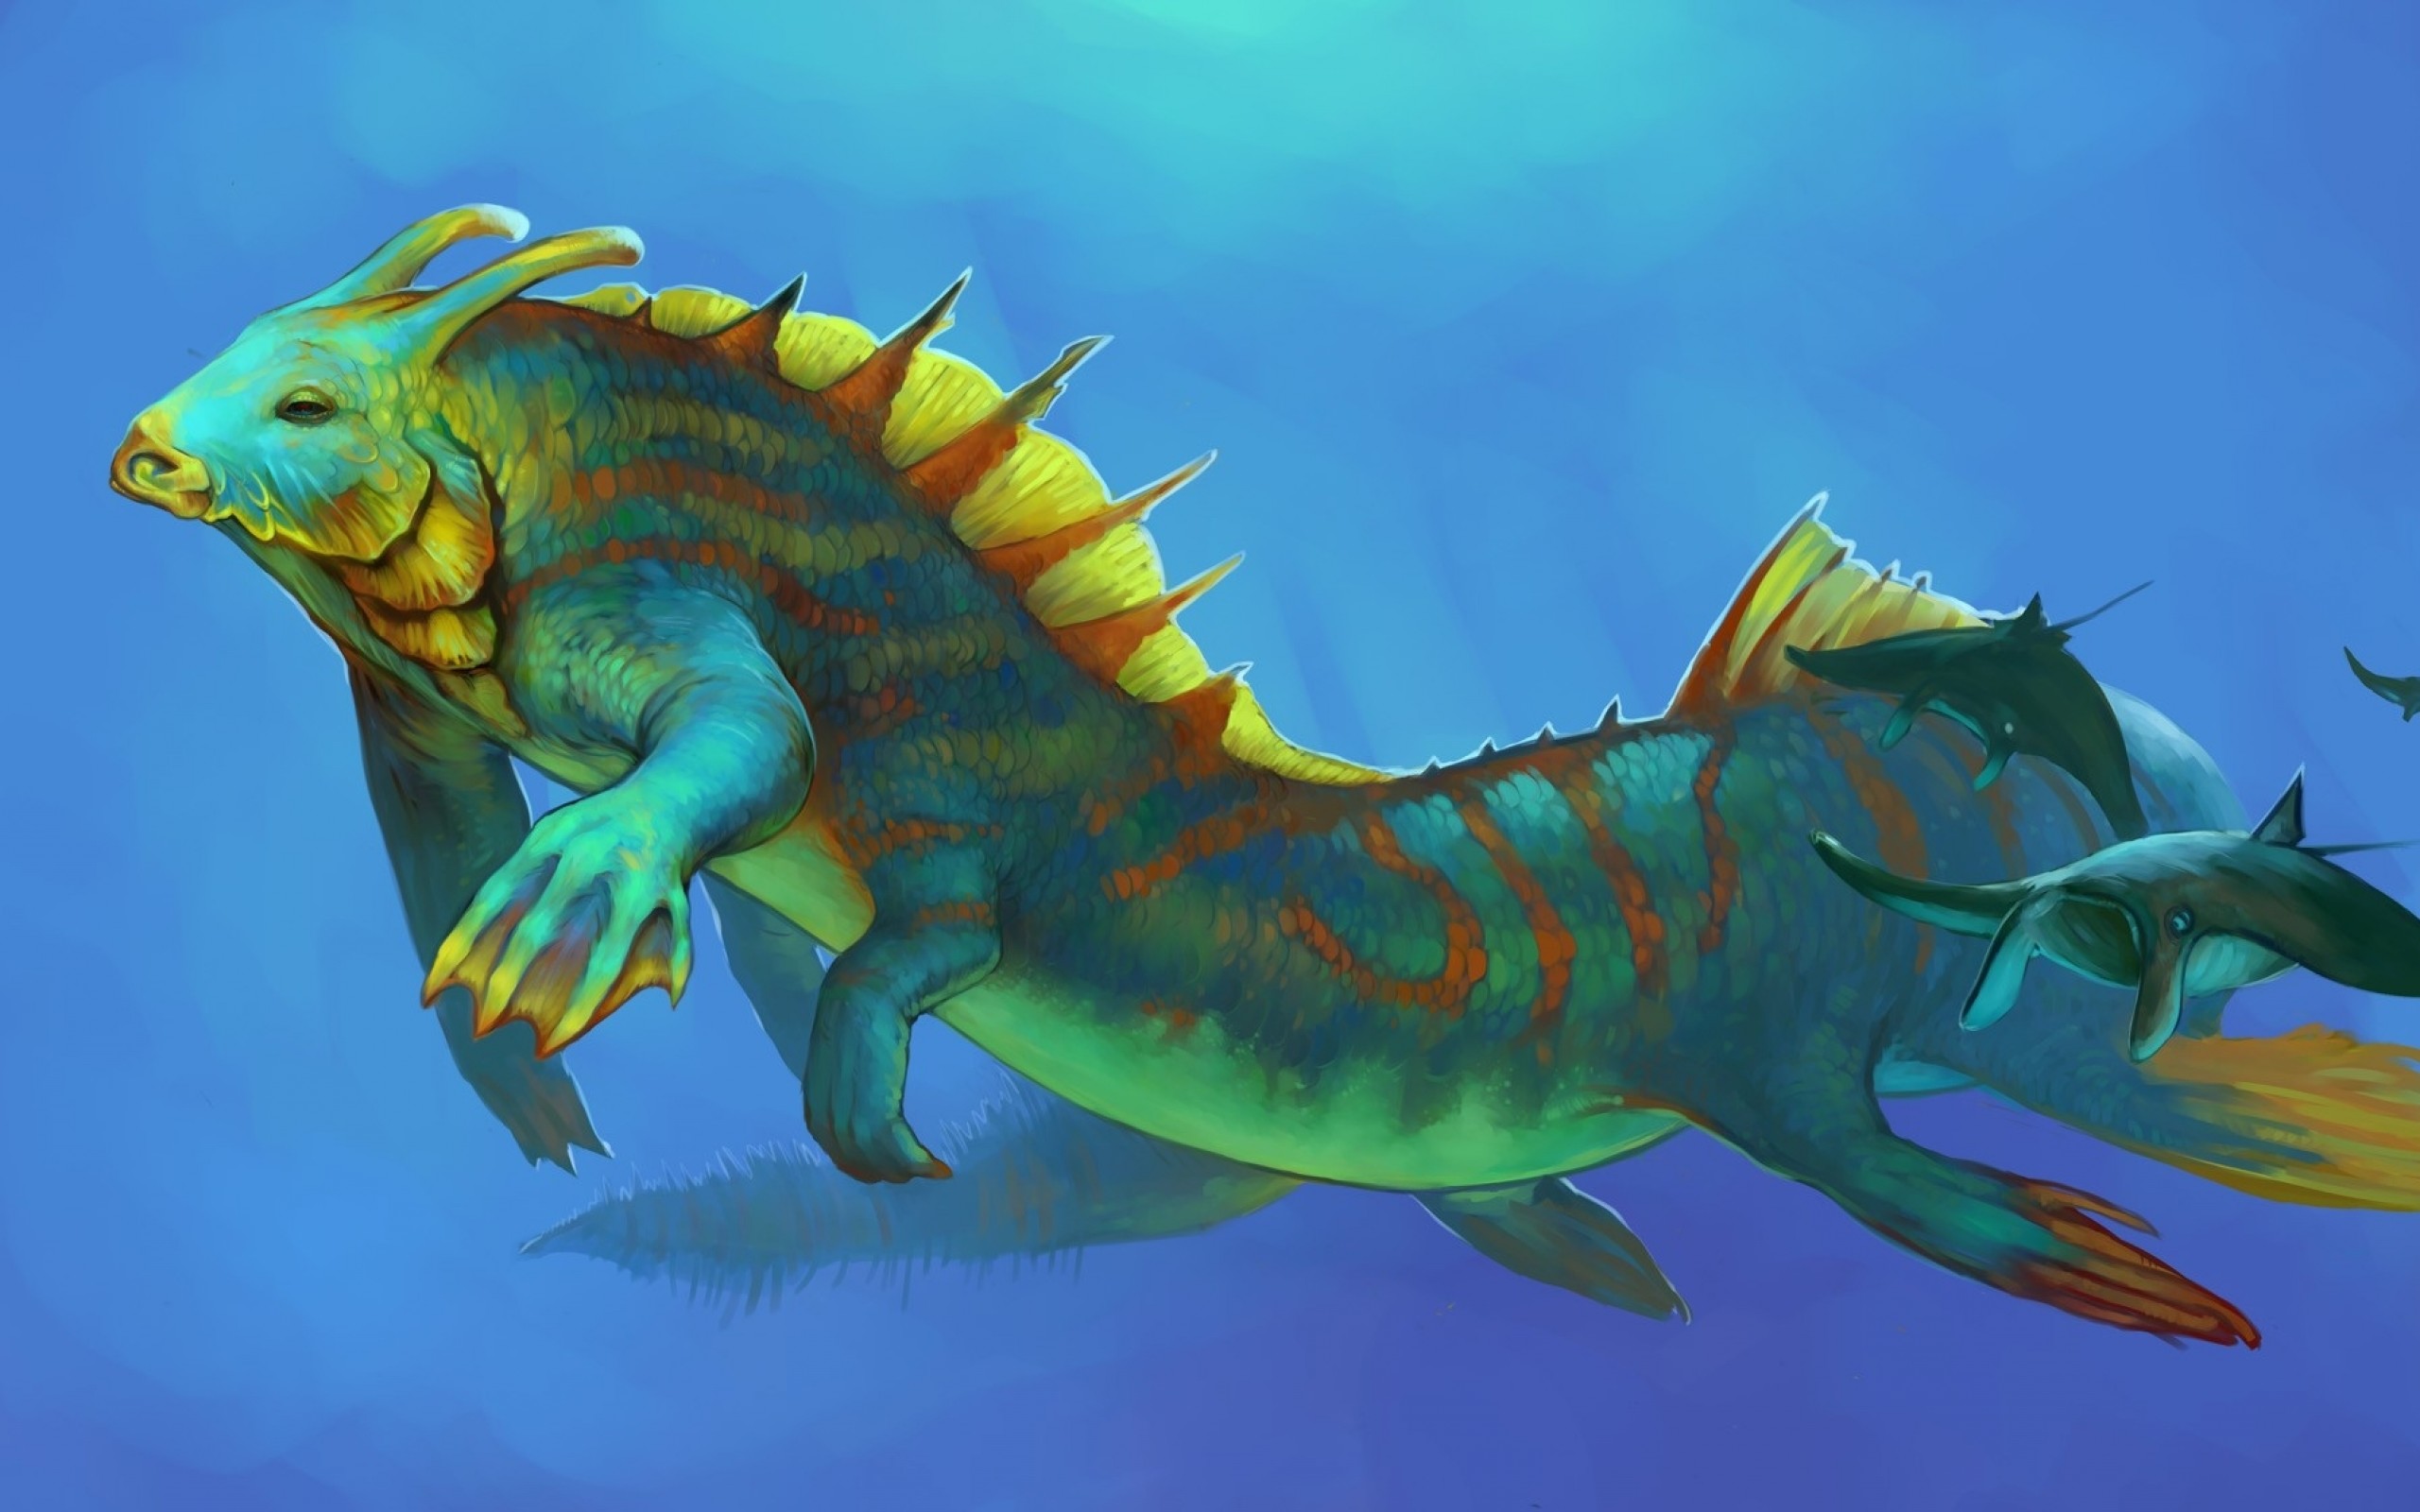 Fish monster monsters creature creatures fantasy dinosaur underwater ocean sea wallpaper 85283 WallpaperUP